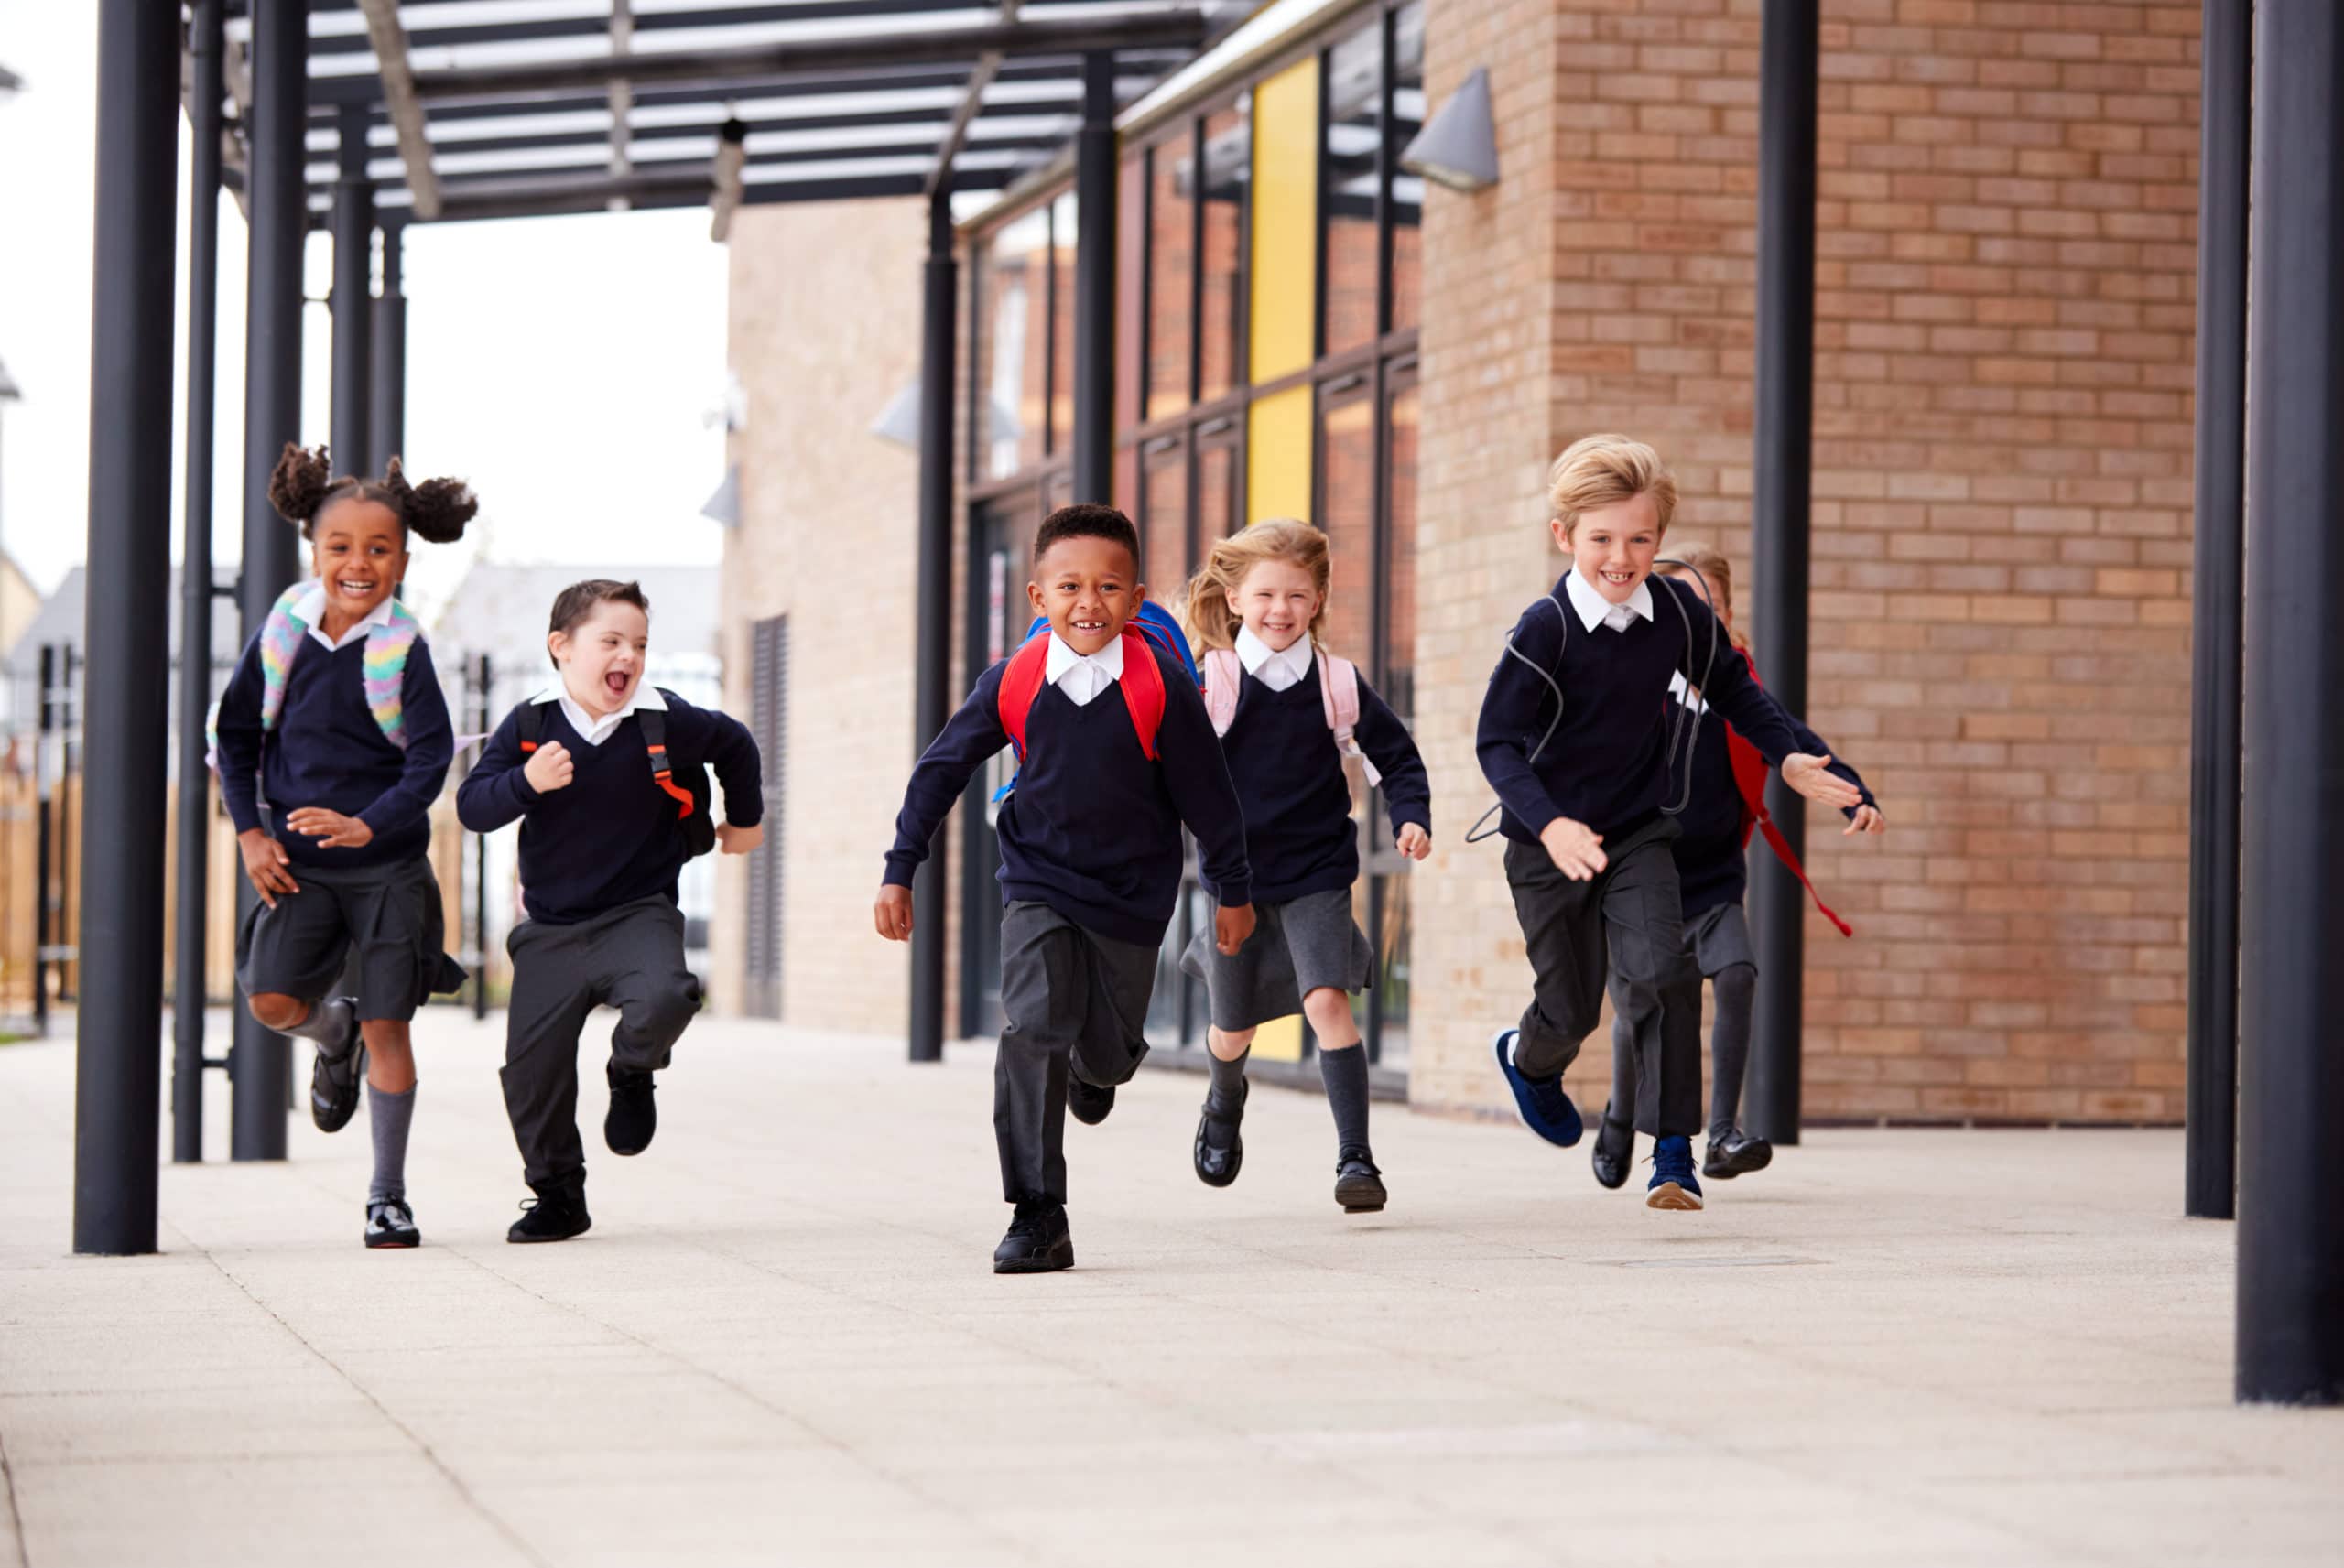 Five school children running